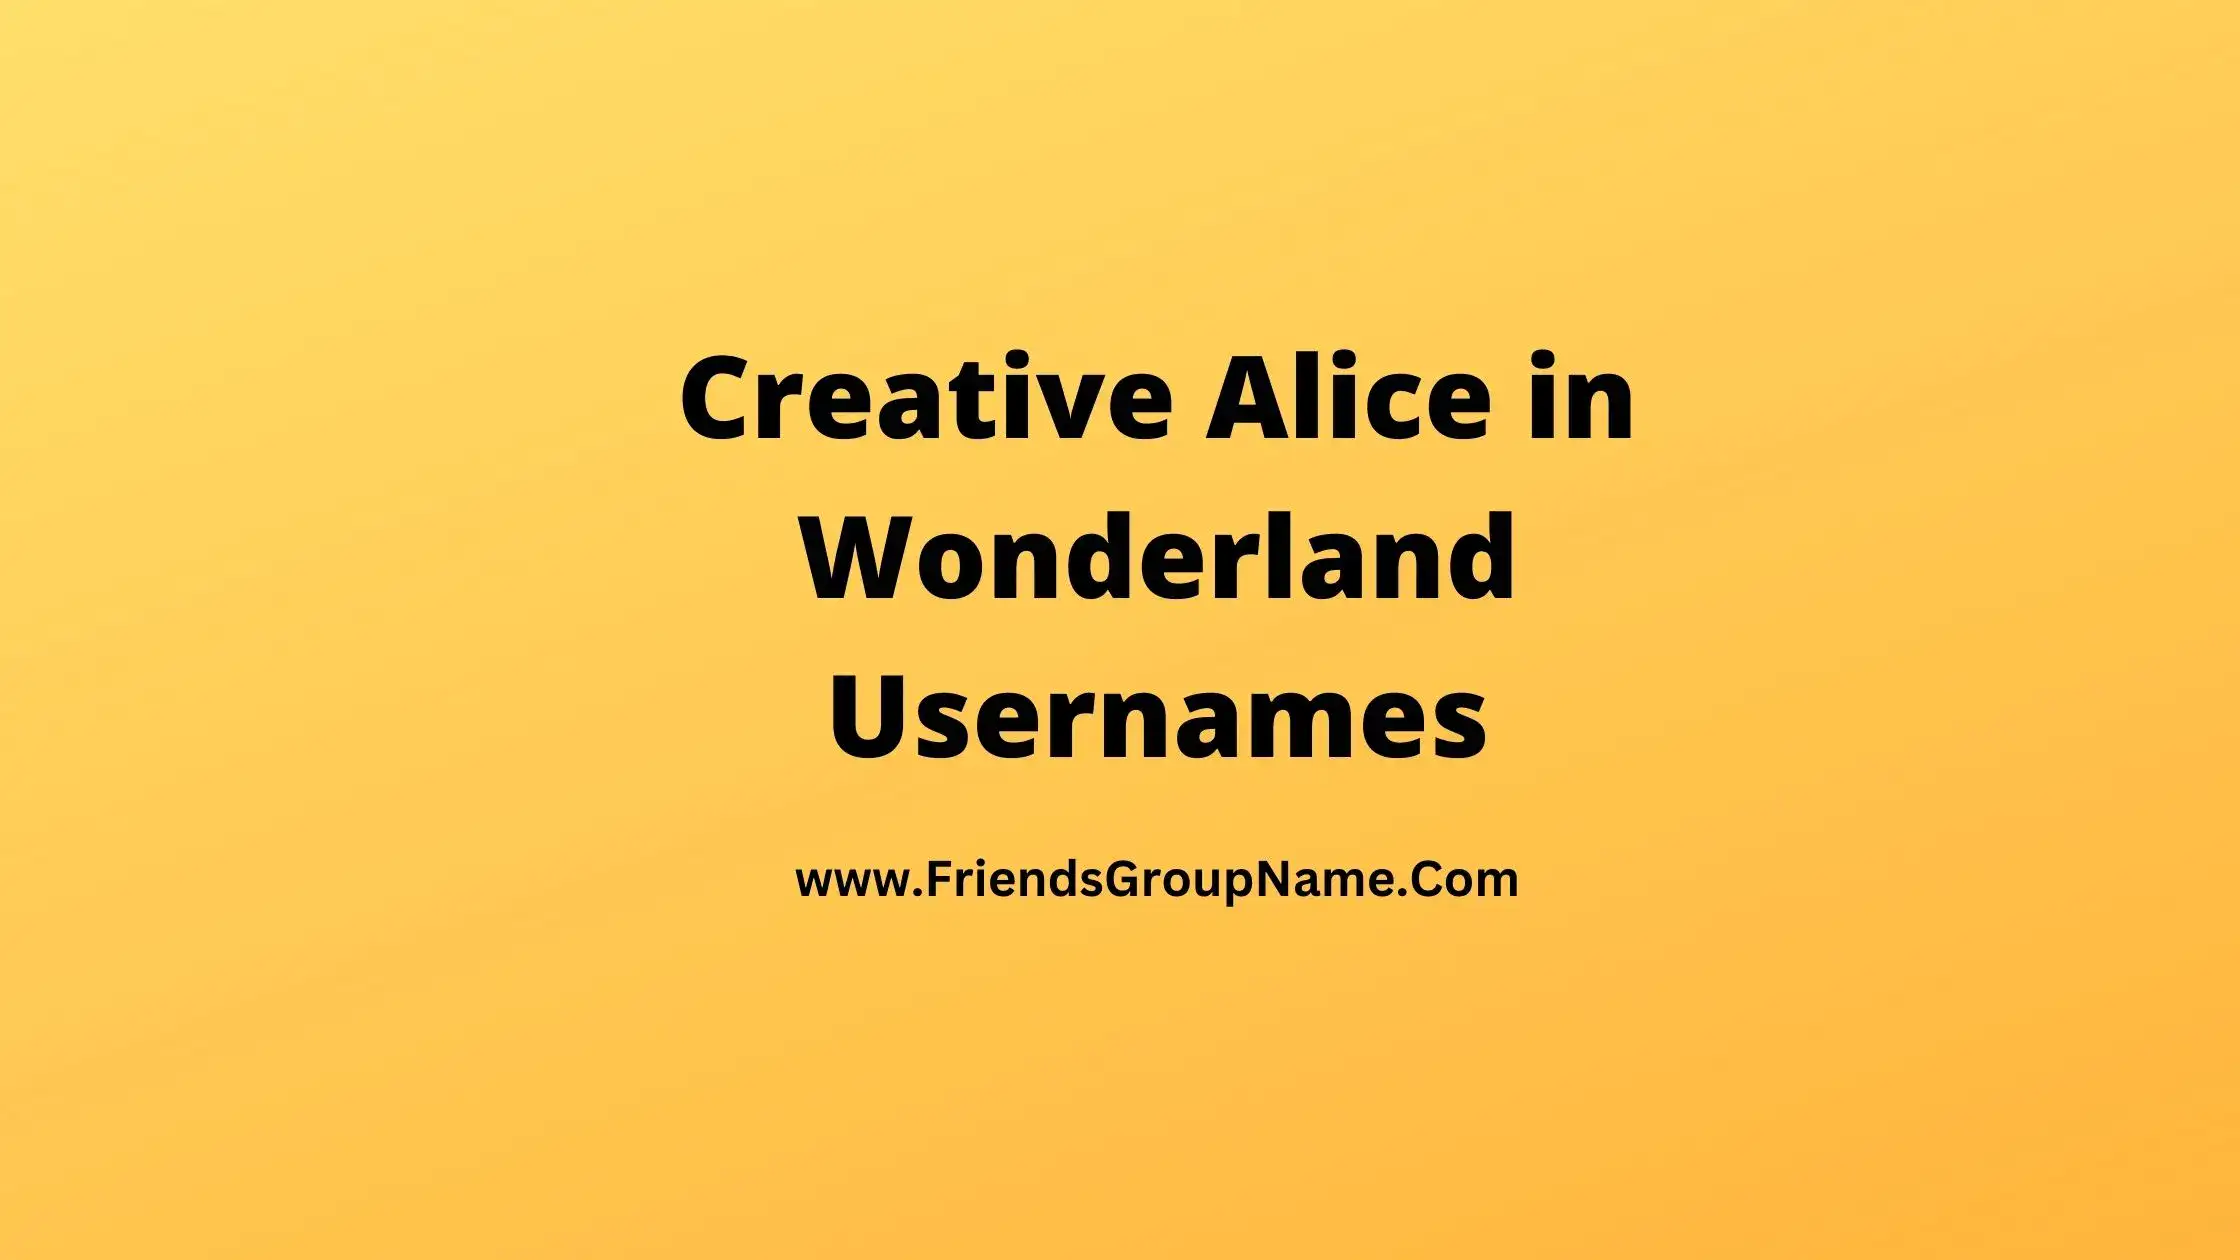 Creative Alice in Wonderland Usernames